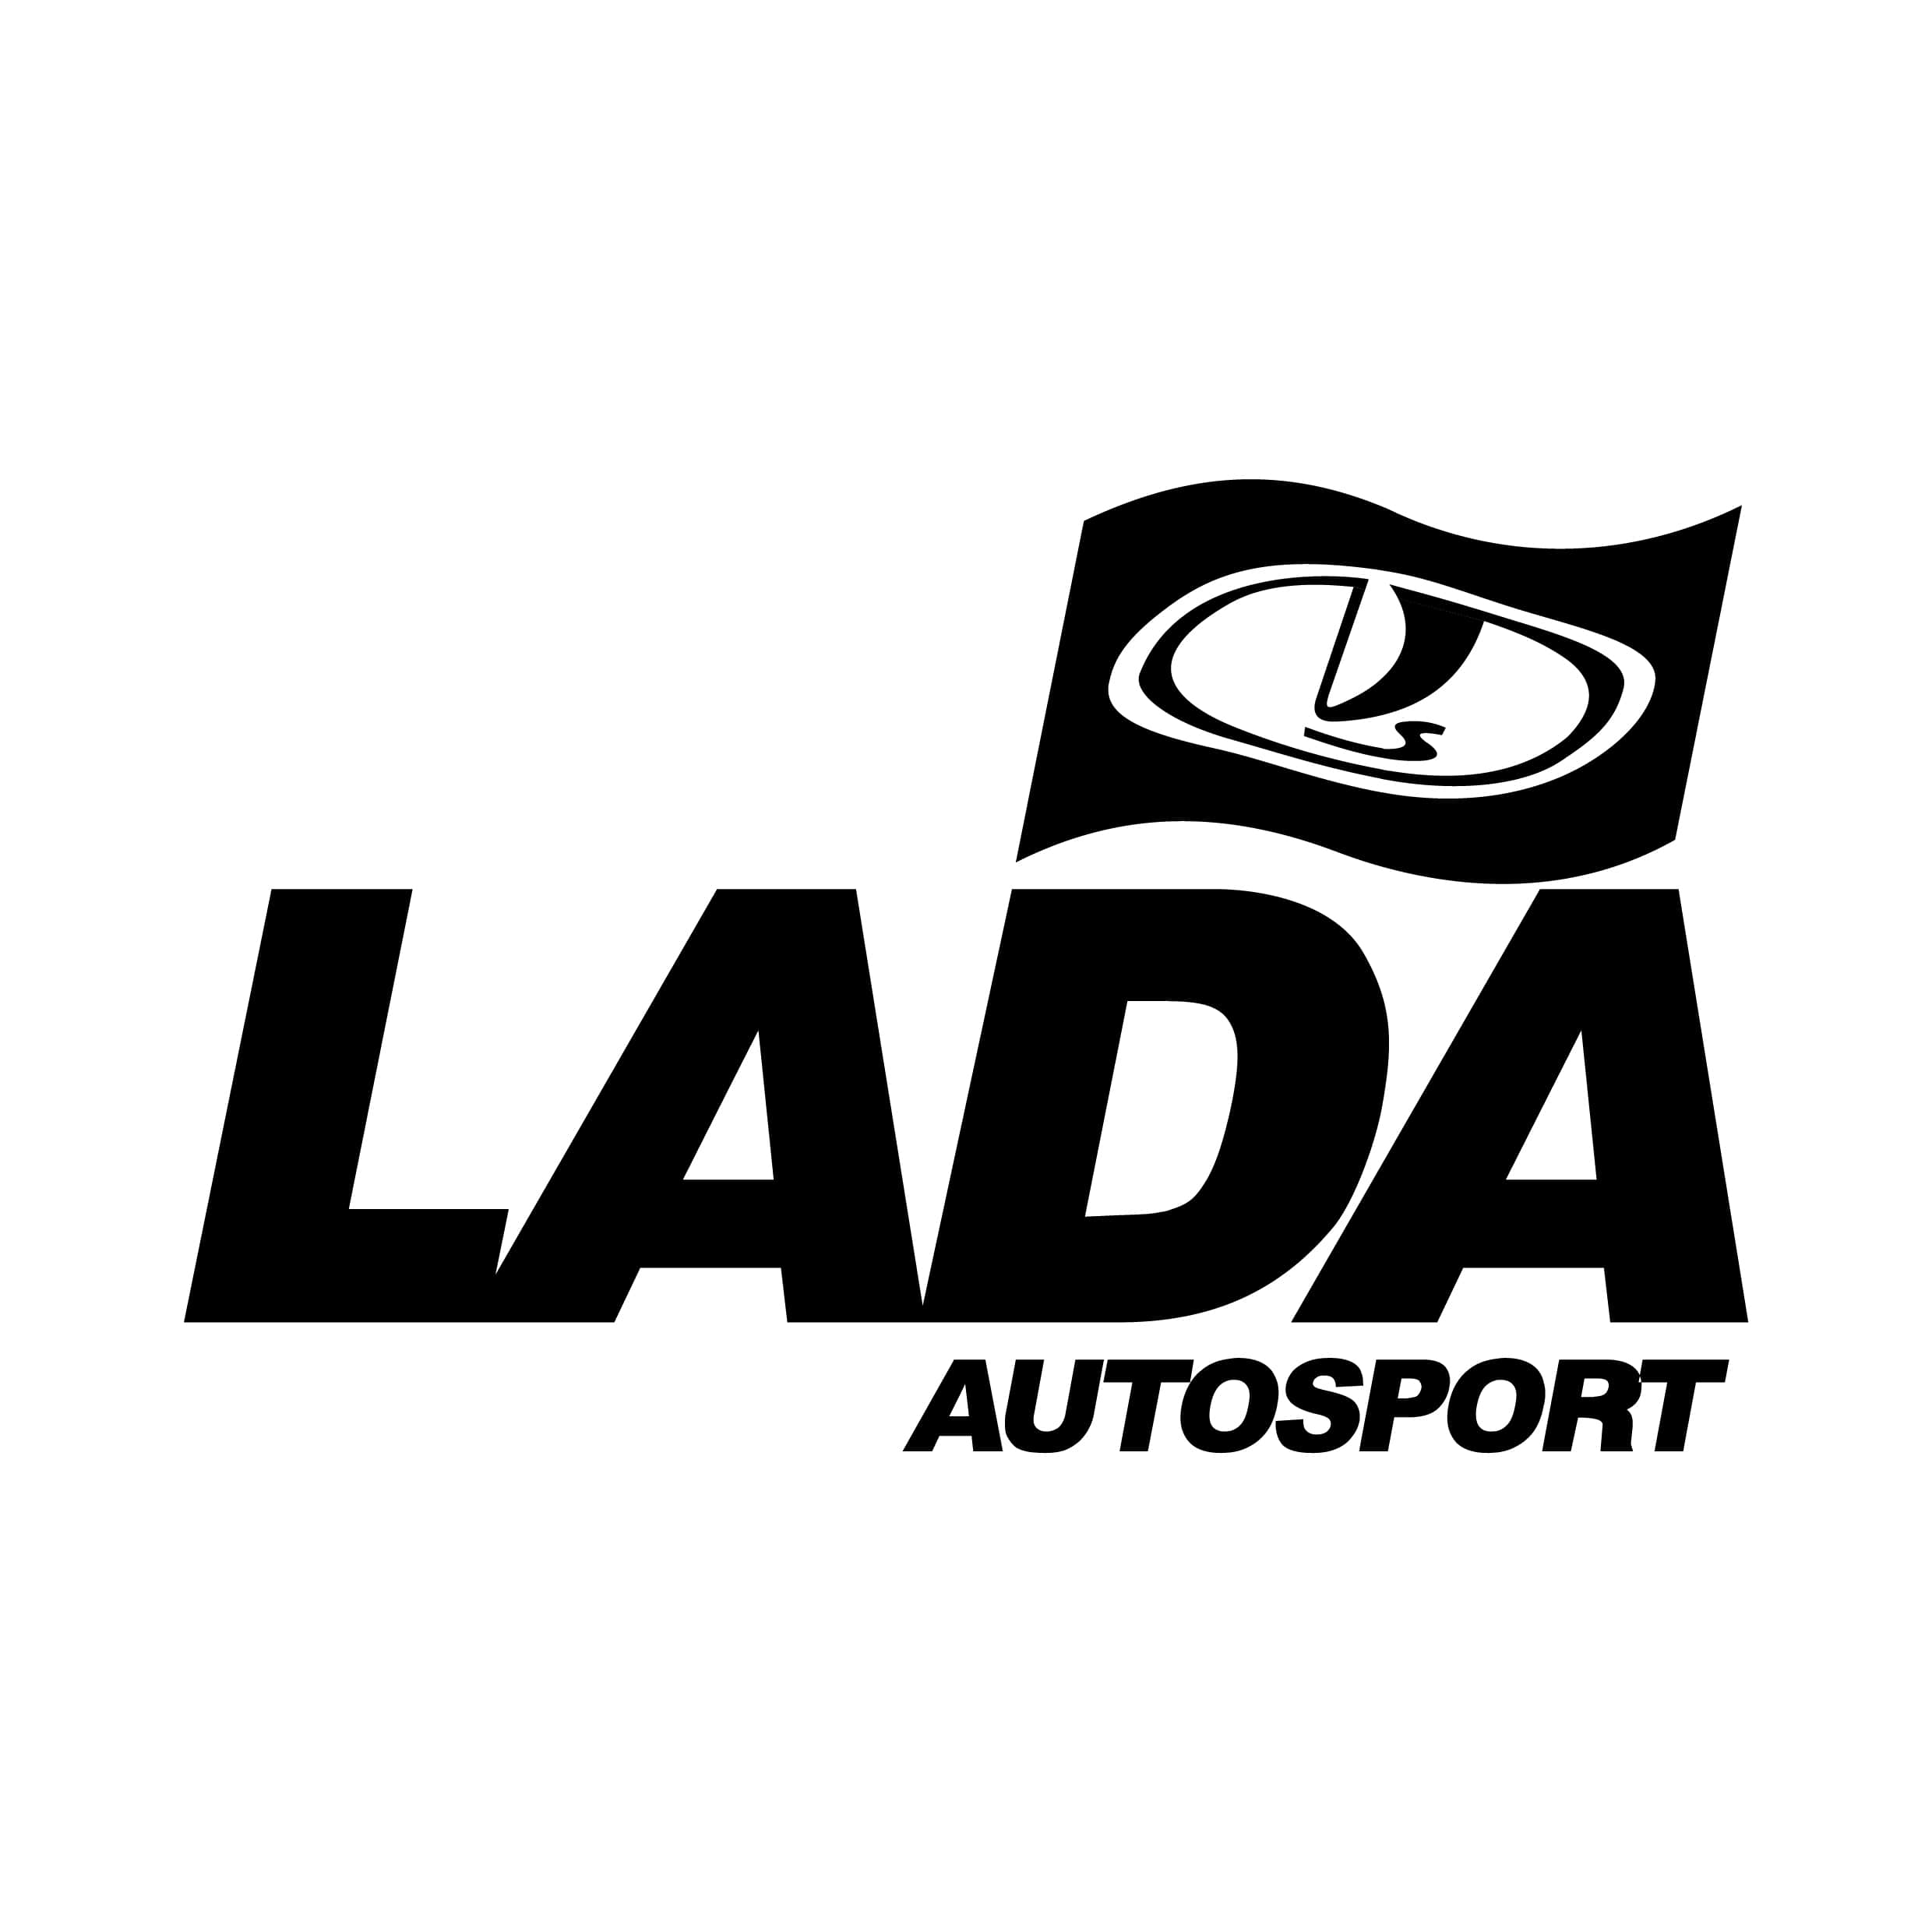 stickers-lada-auto-sport-ref10-autocollant-voiture-sticker-auto-autocollants-decals-sponsors-racing-tuning-sport-logo-min